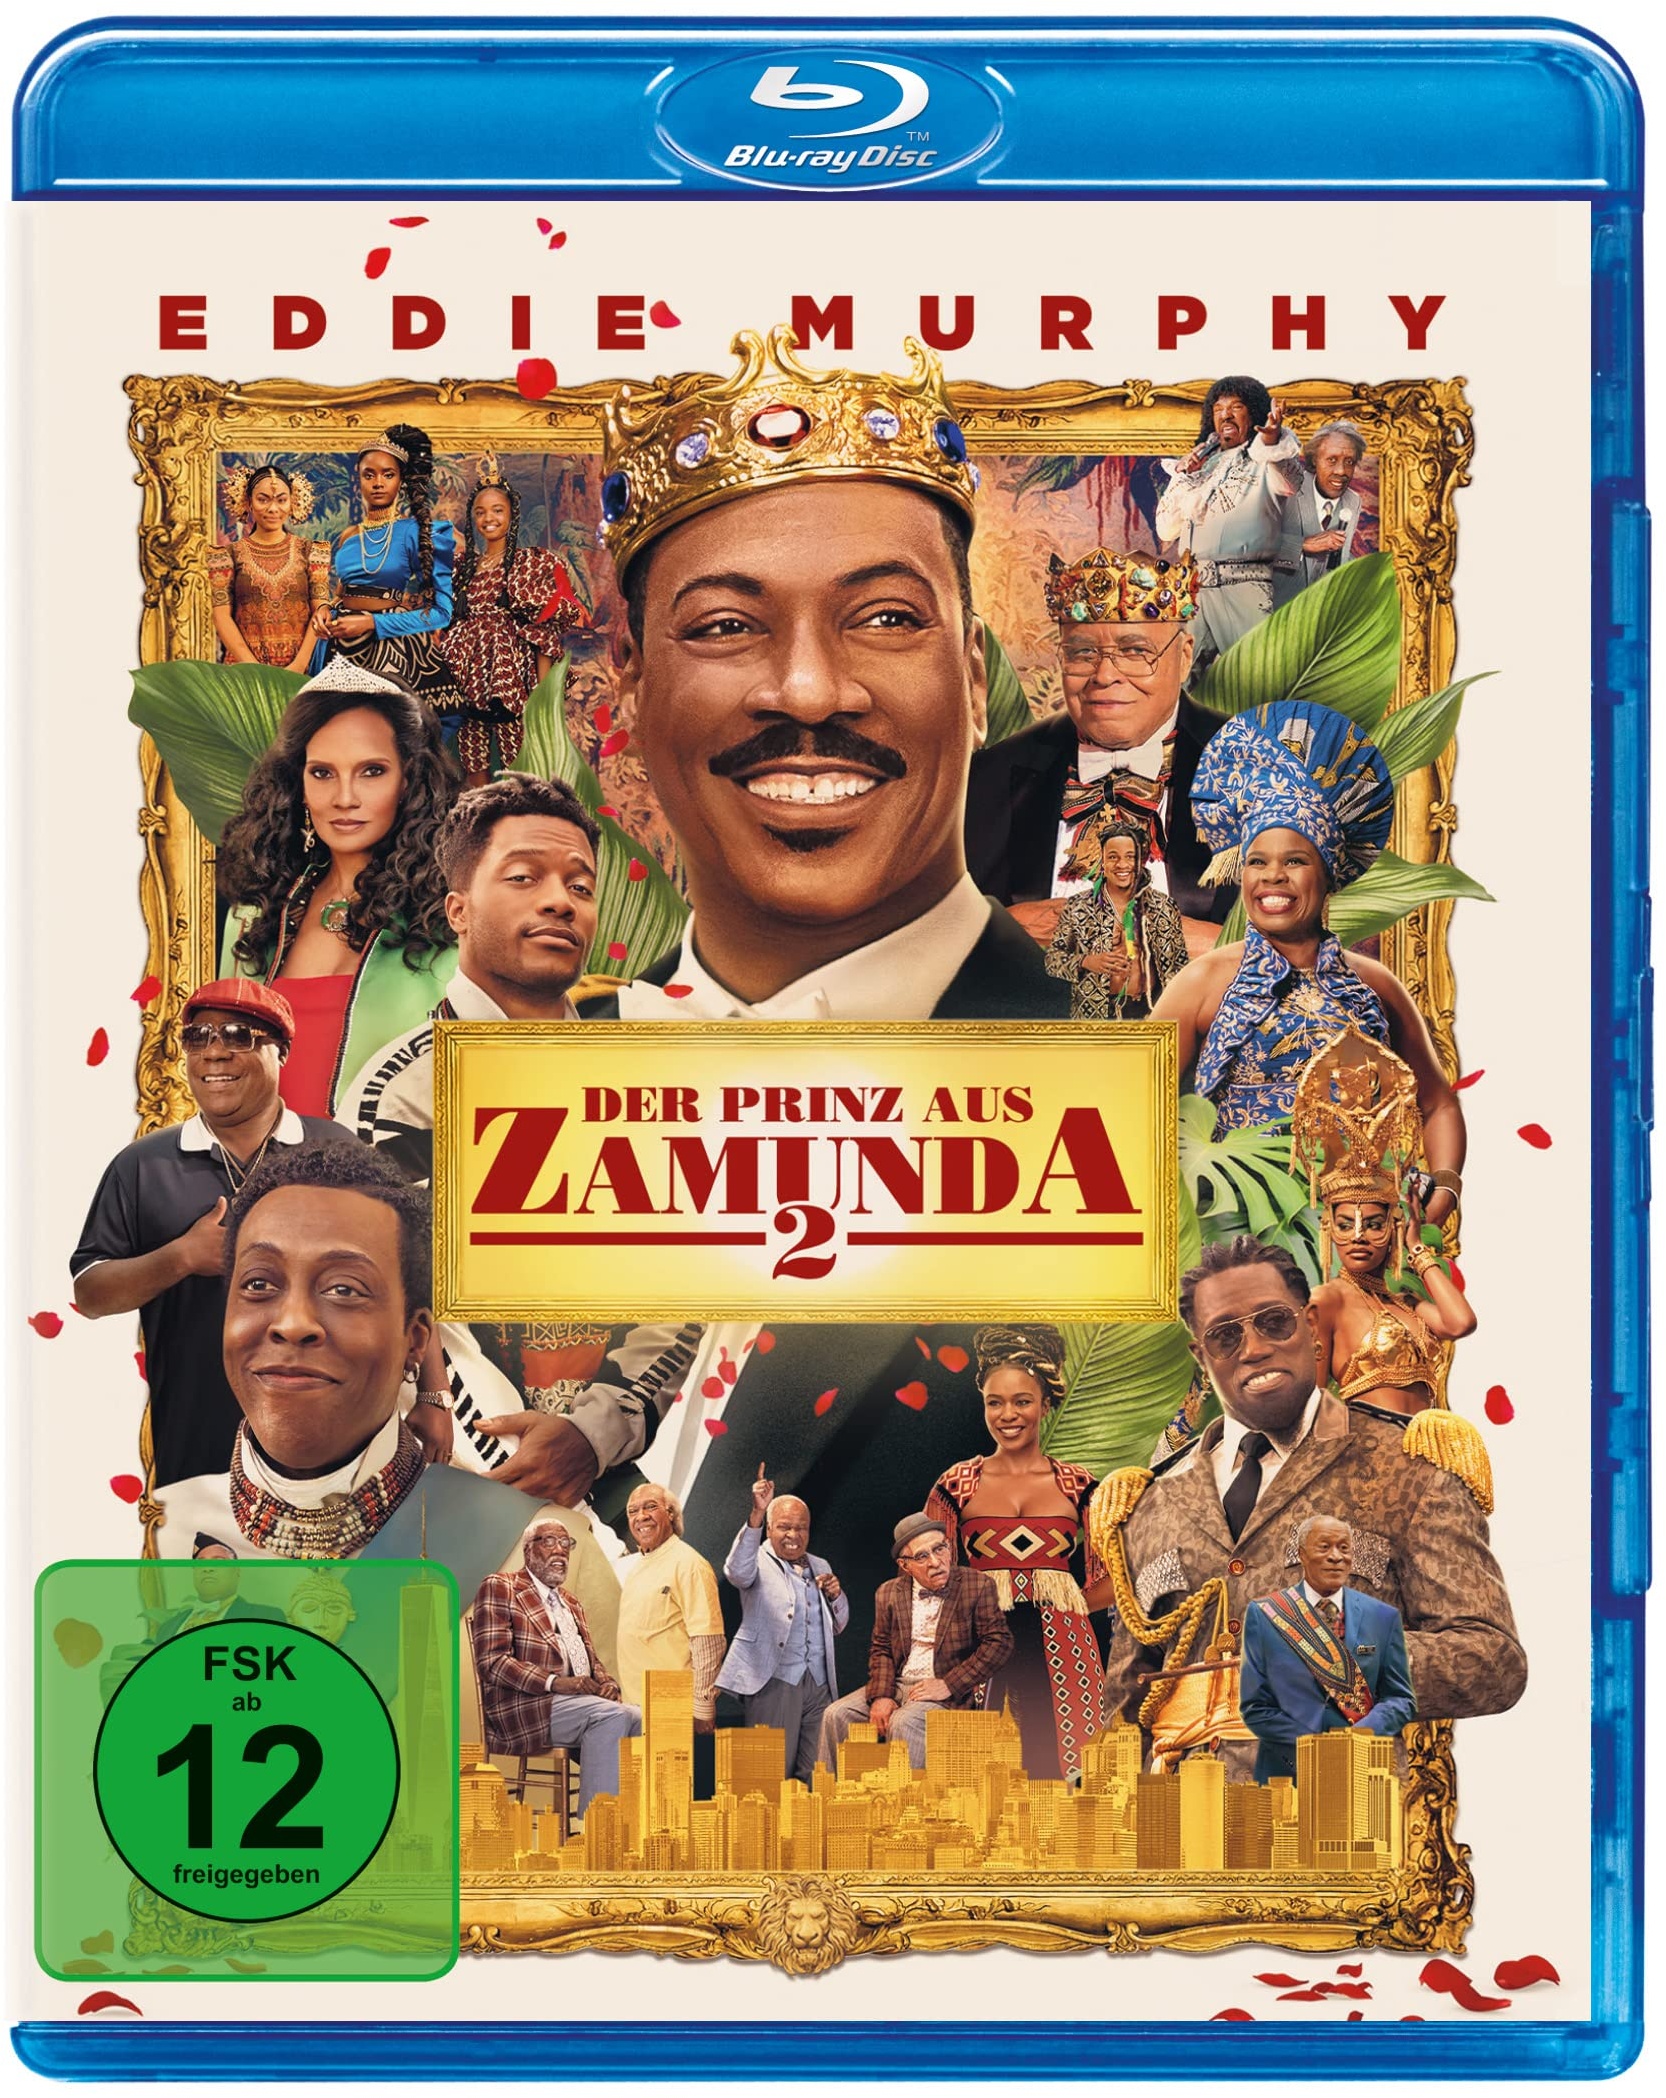 Der Prinz aus Zamunda 2 [Blu-ray] (Neu differenzbesteuert)